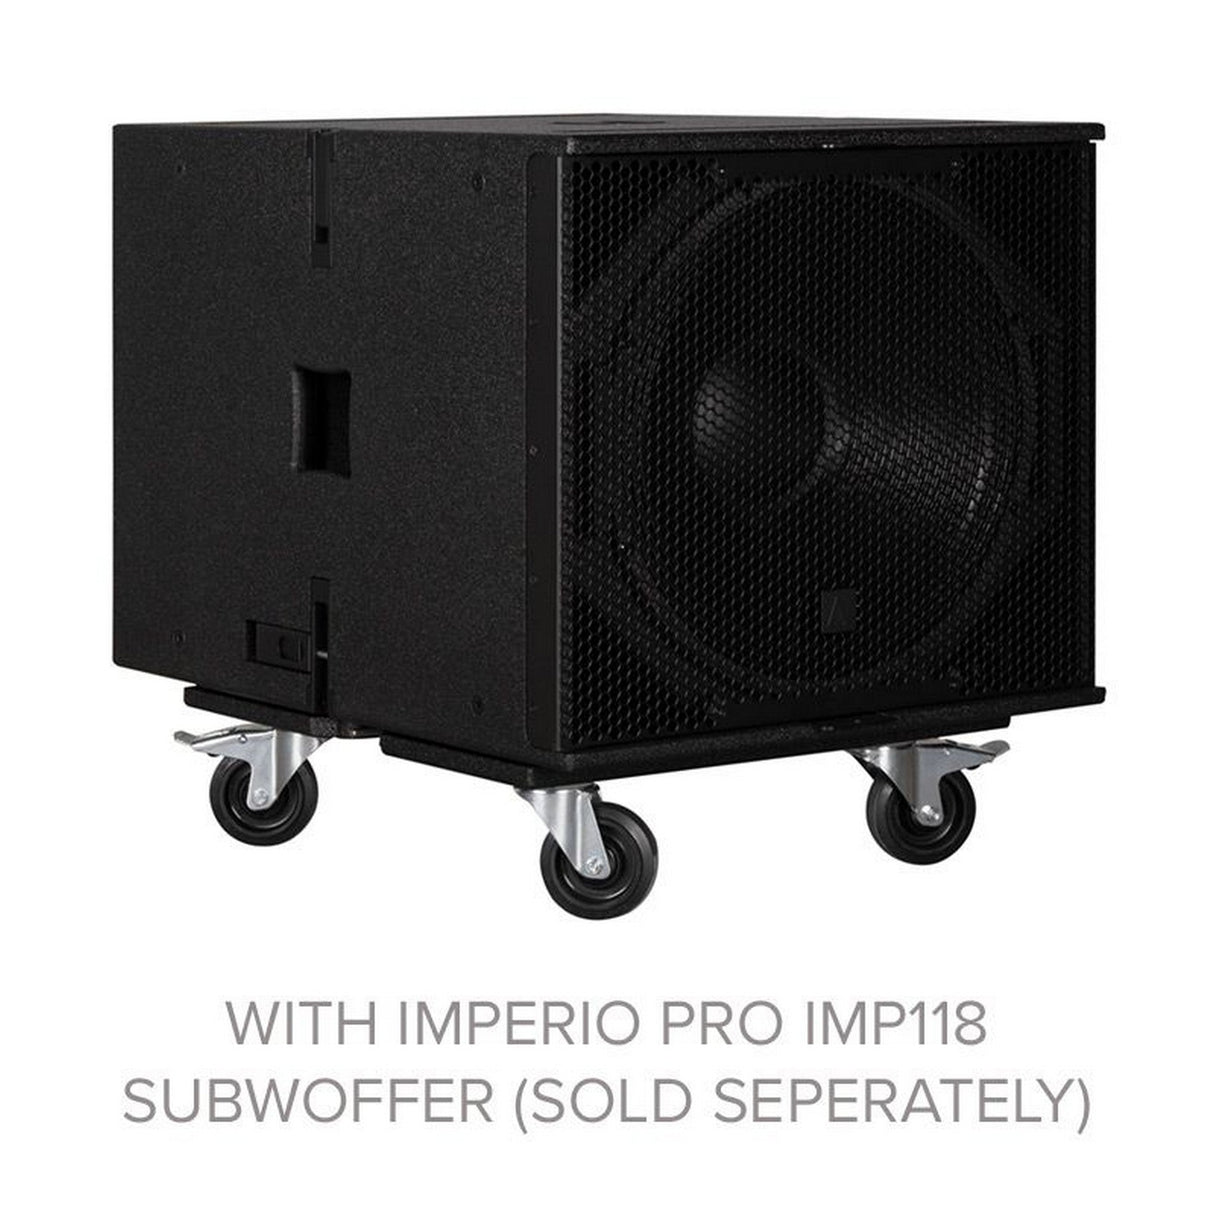 Avante Imperio Pro IMC118 Removable Caster Board for Imperio Pro IMP118 Subwoofer